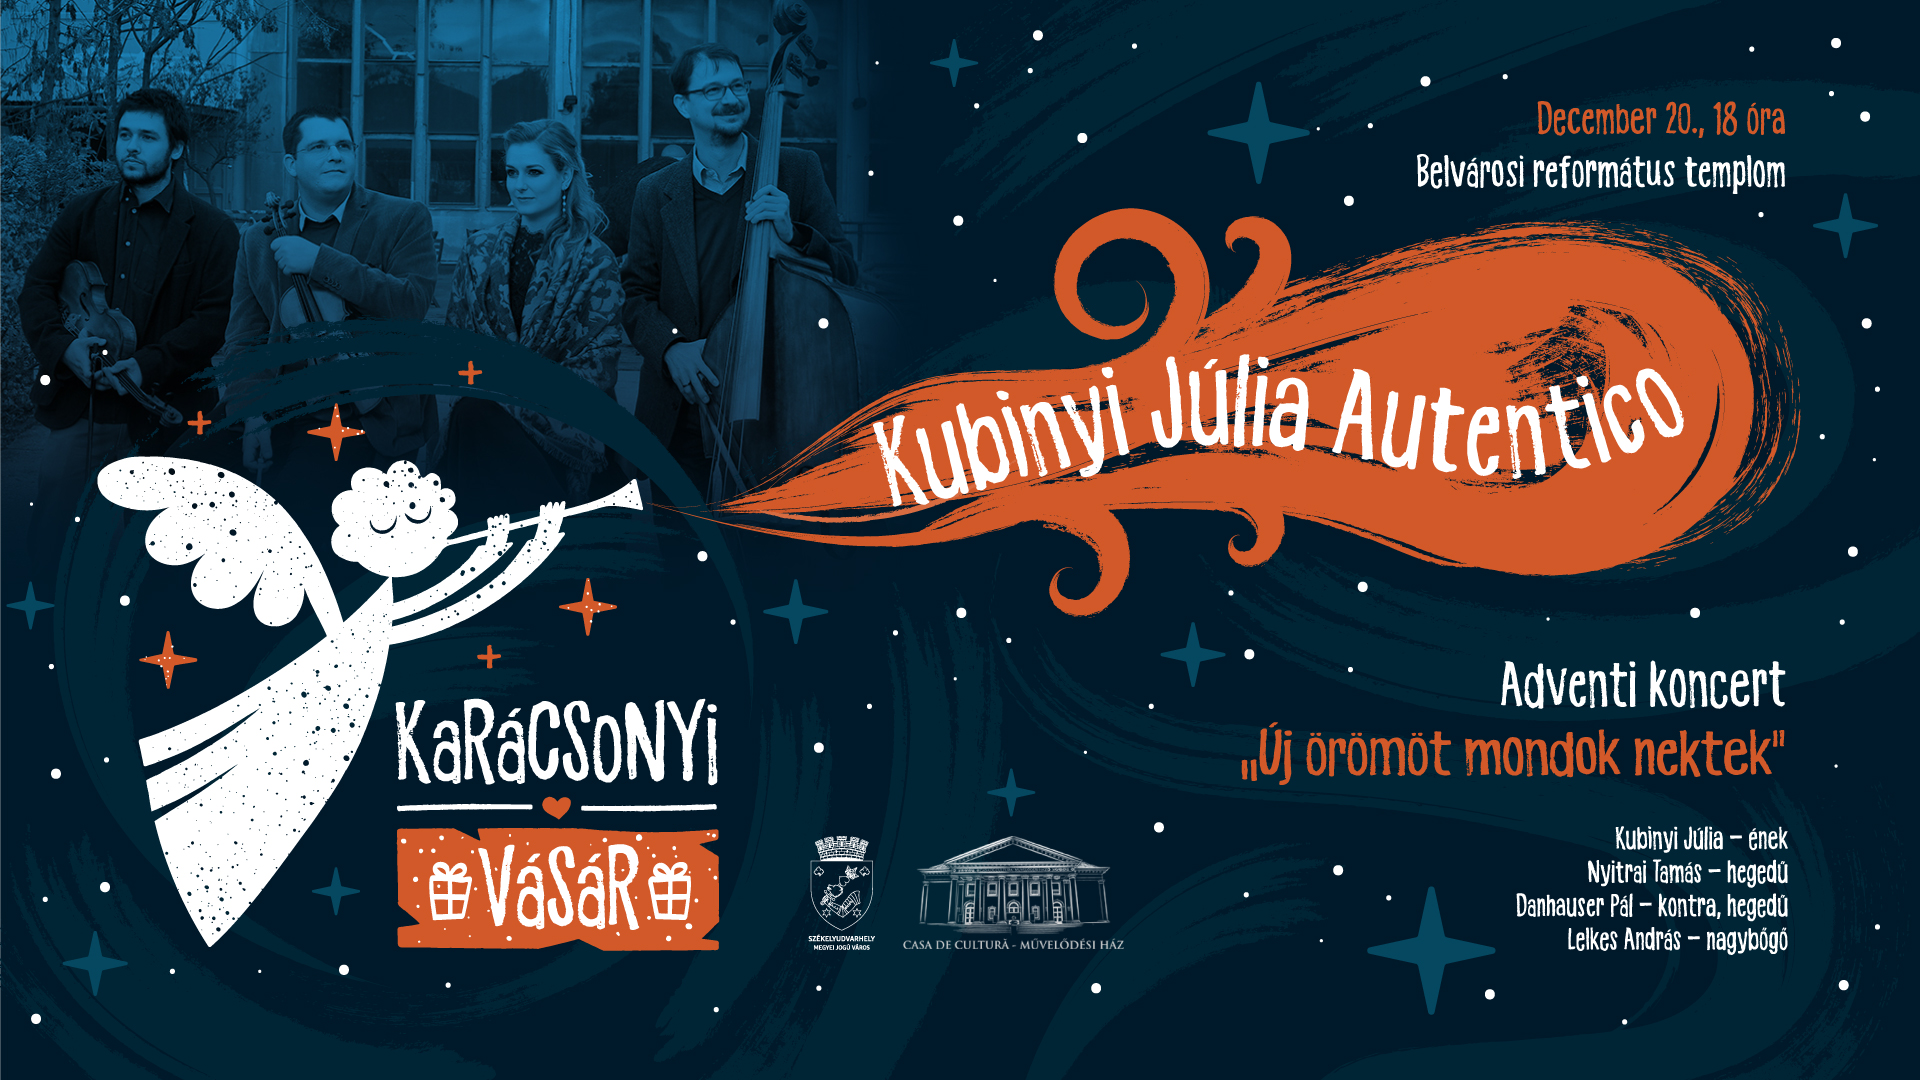 "Új örömöt mondok nektek" – Kubinyi Júlia Autentico adventi koncertje